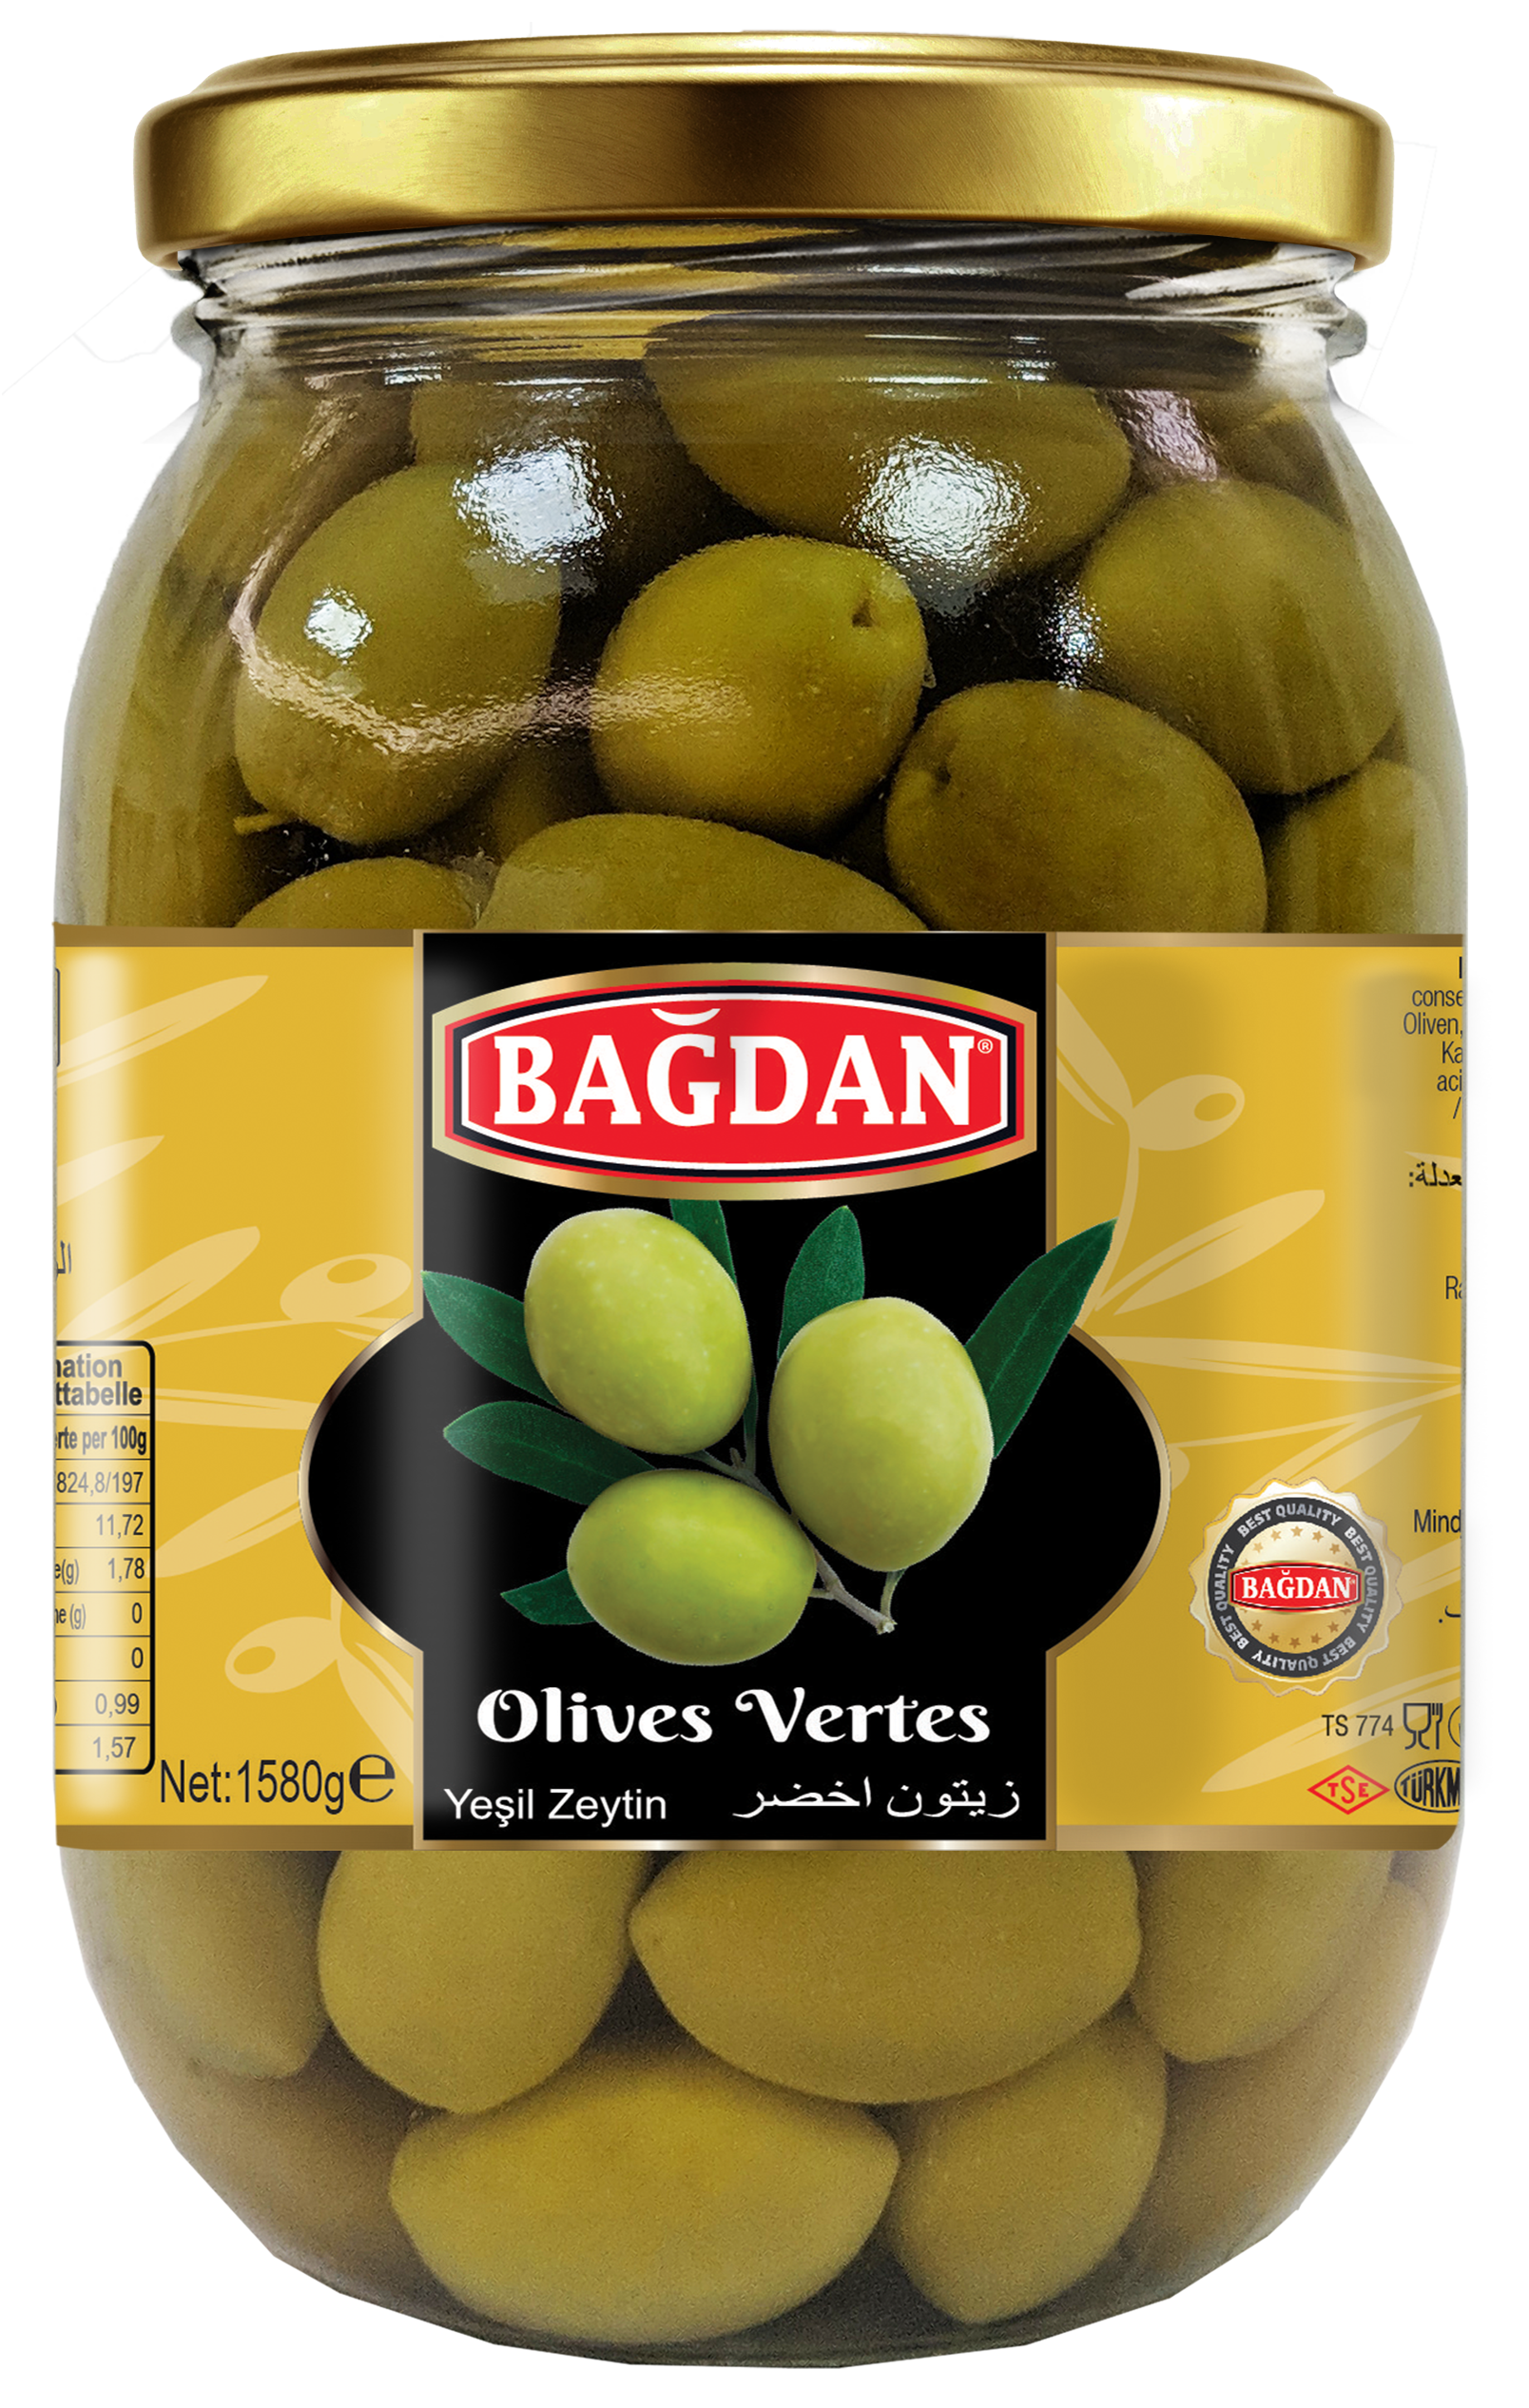 BAGDAN CAM YESIL ZEYTIN 1580G (olives vertes)